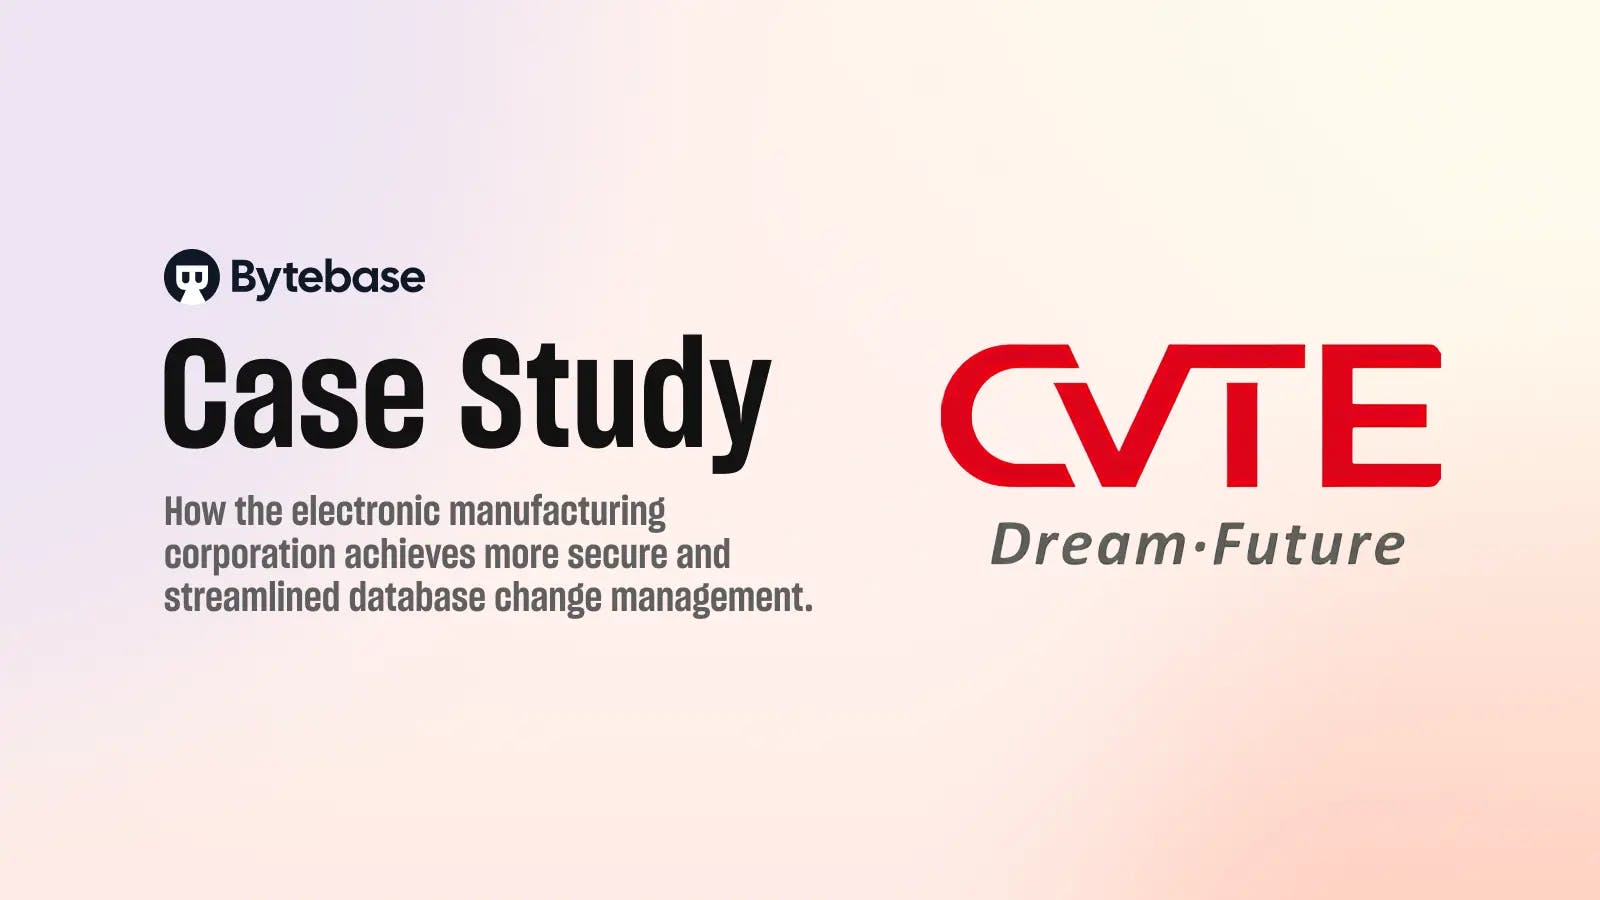 Case Study - CVTE